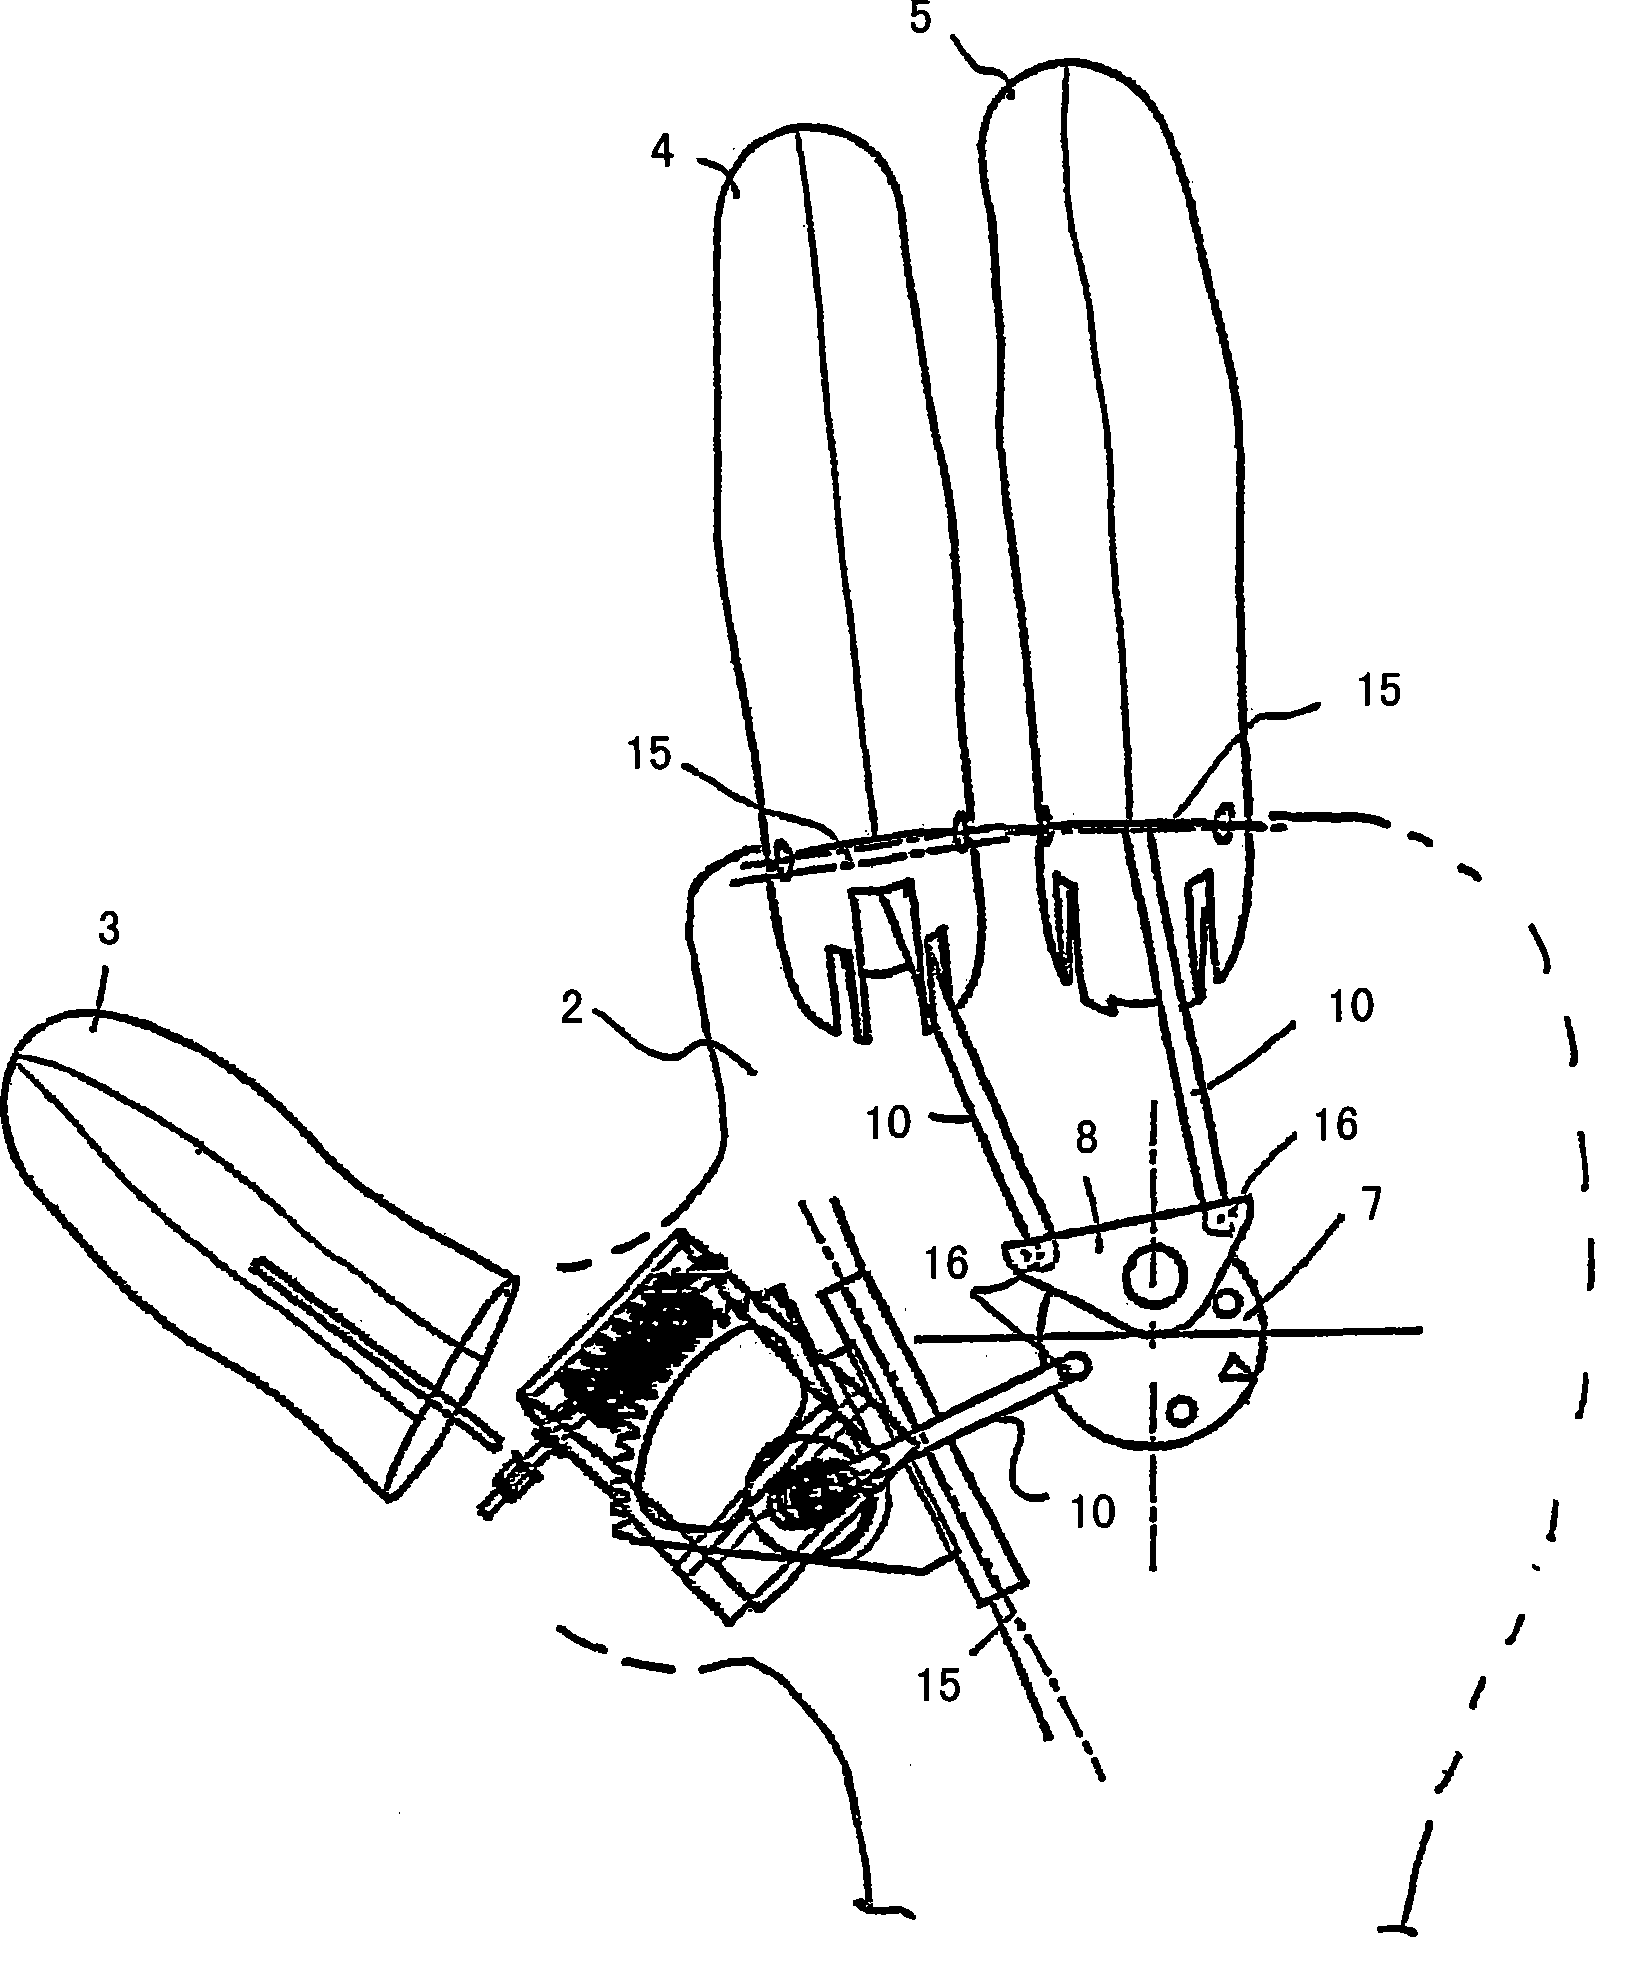 Hand prosthesis